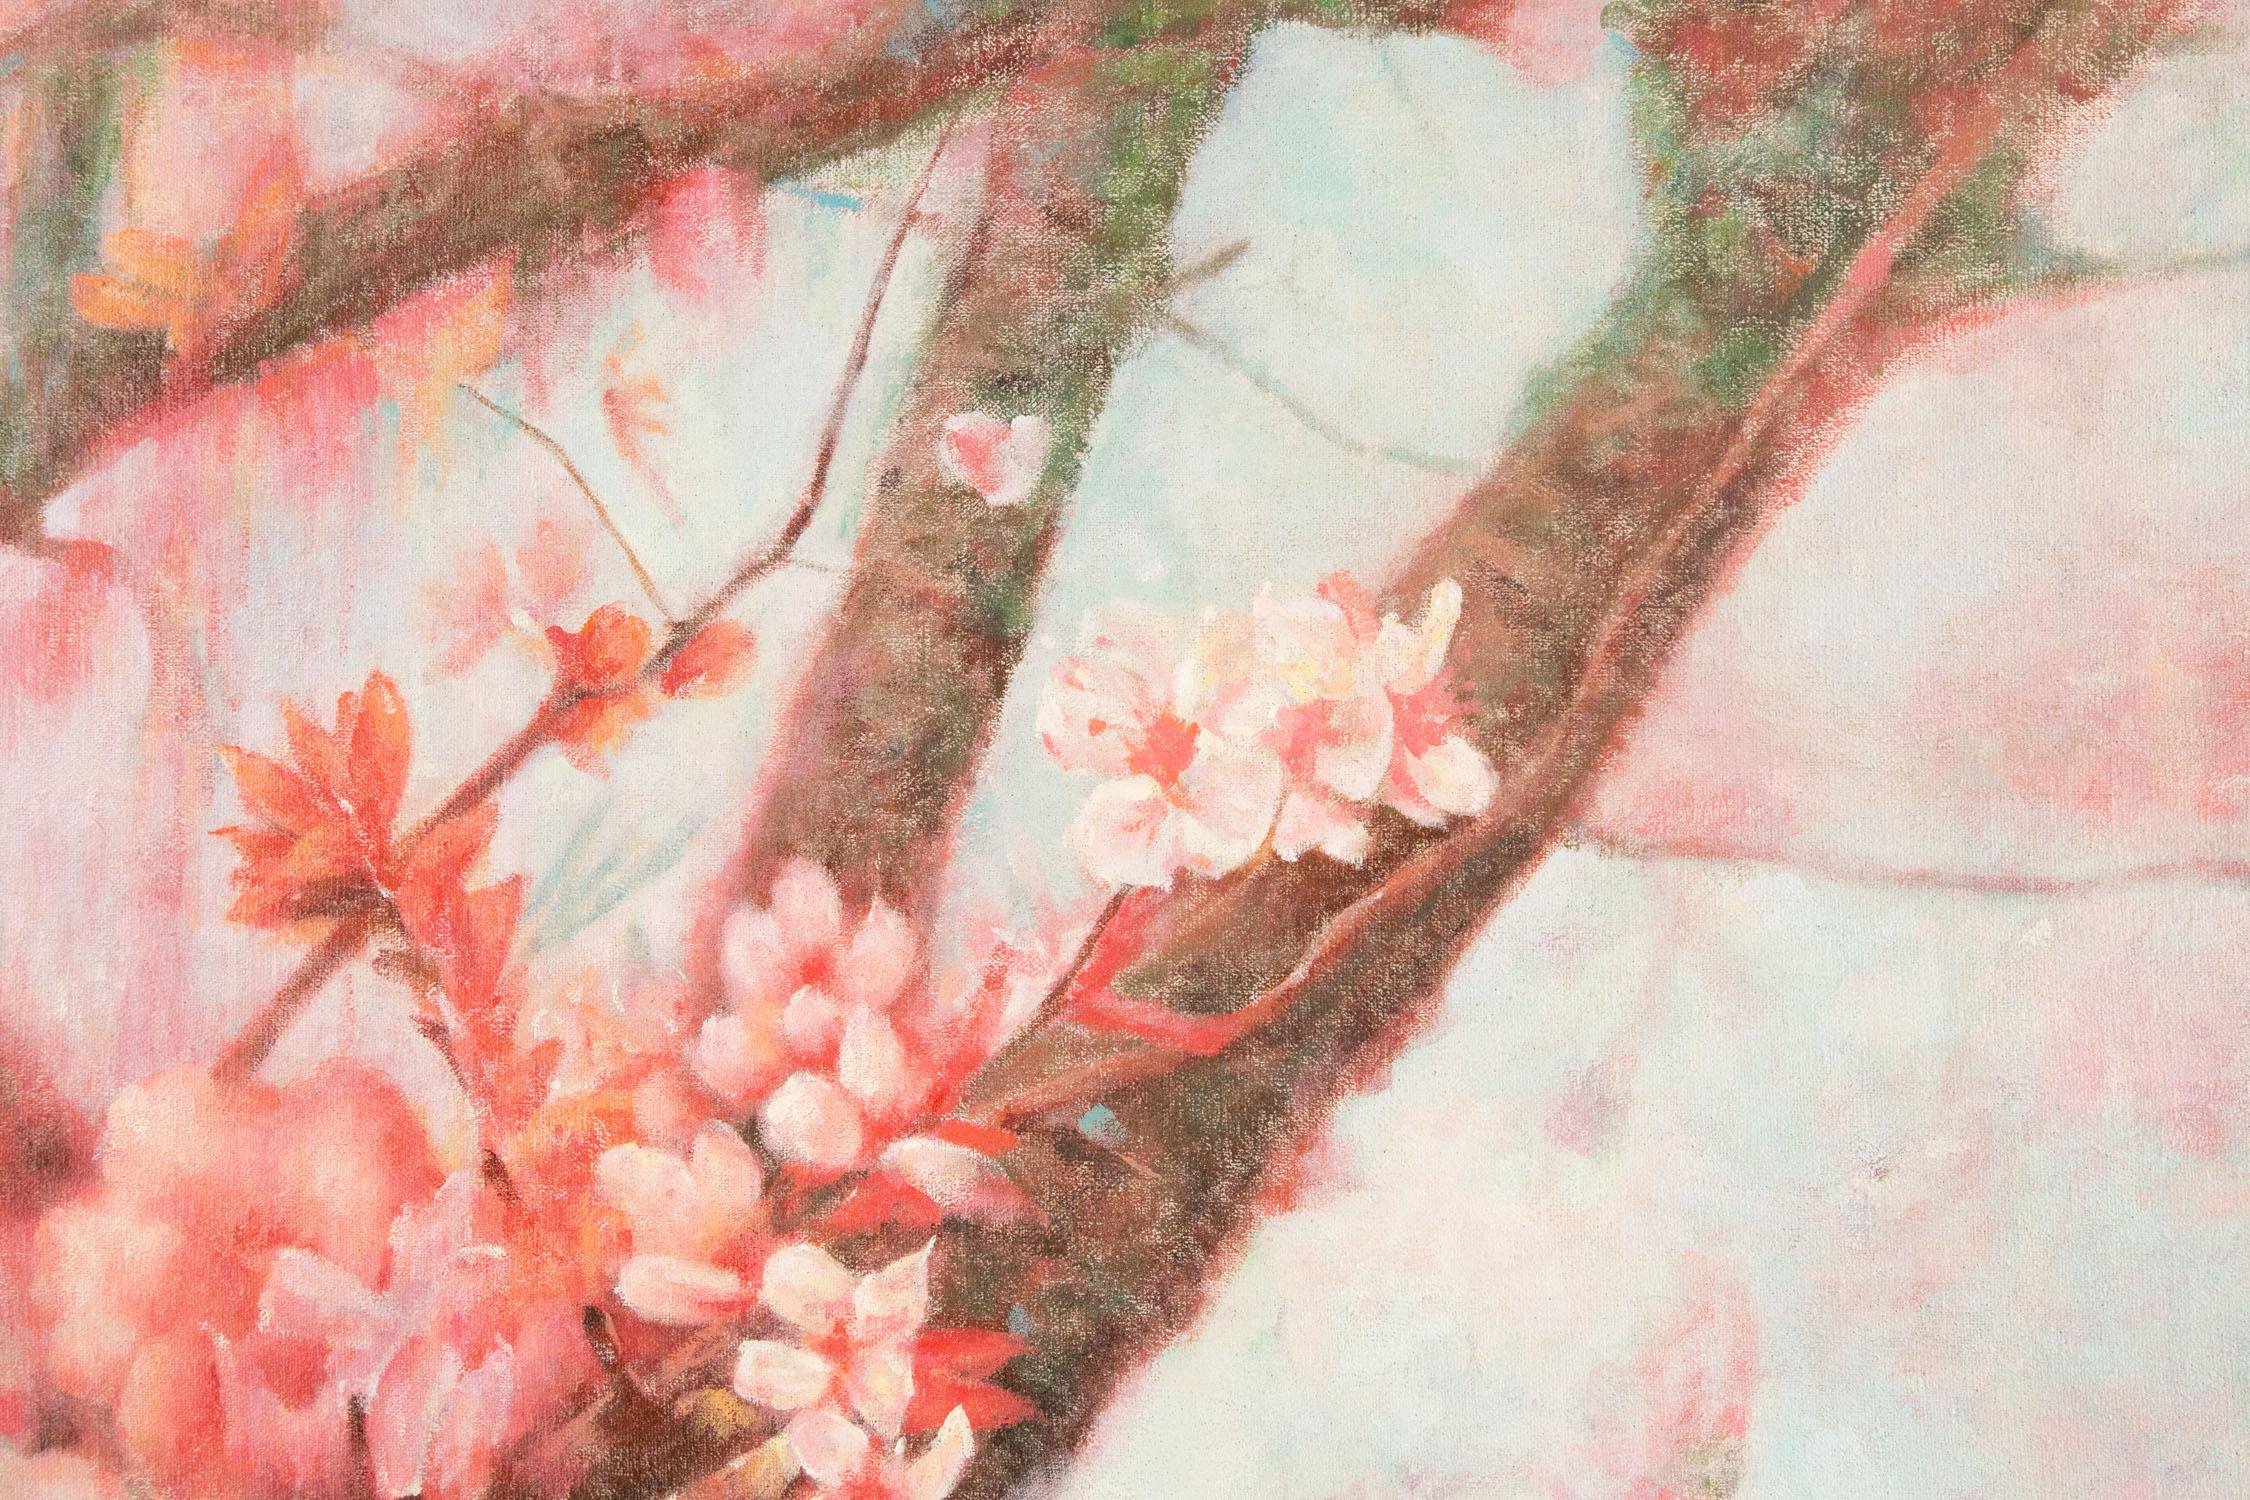 ShouZhang Wang Floral Original Oil On Canvas 